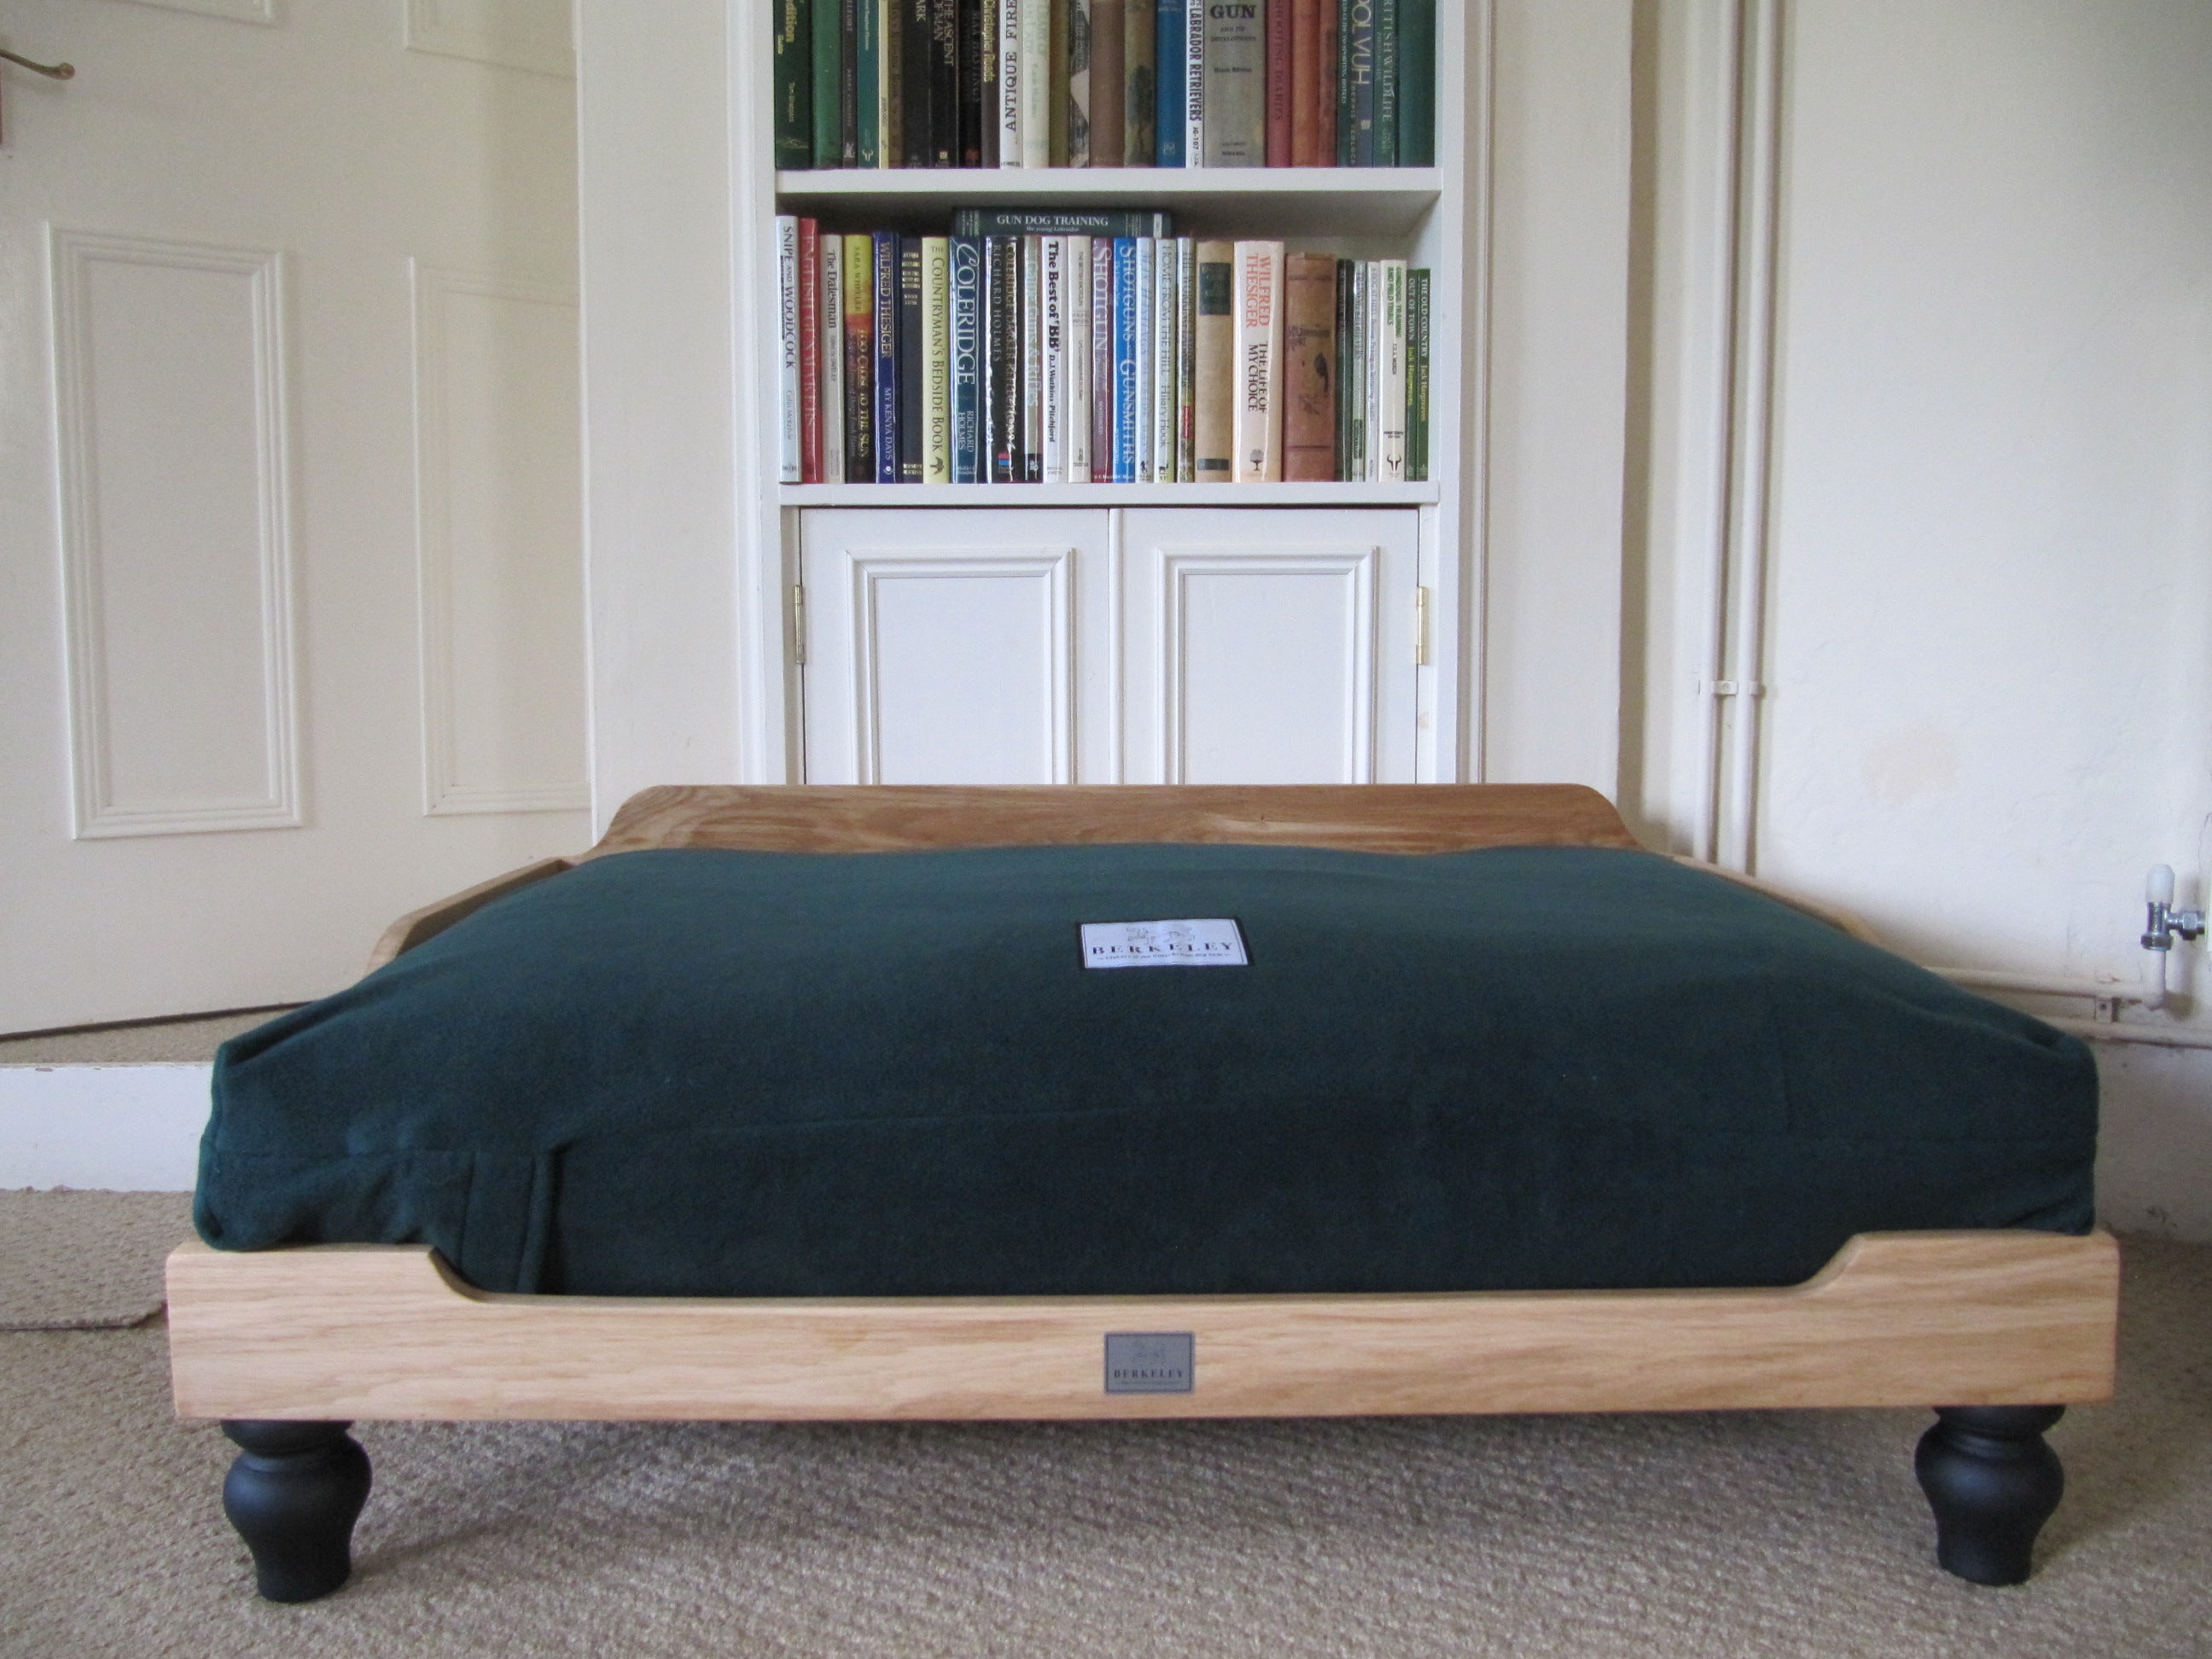 Luxury Wooden Dog Bed and Waterproof Orthopedic Mattress by Berkeley